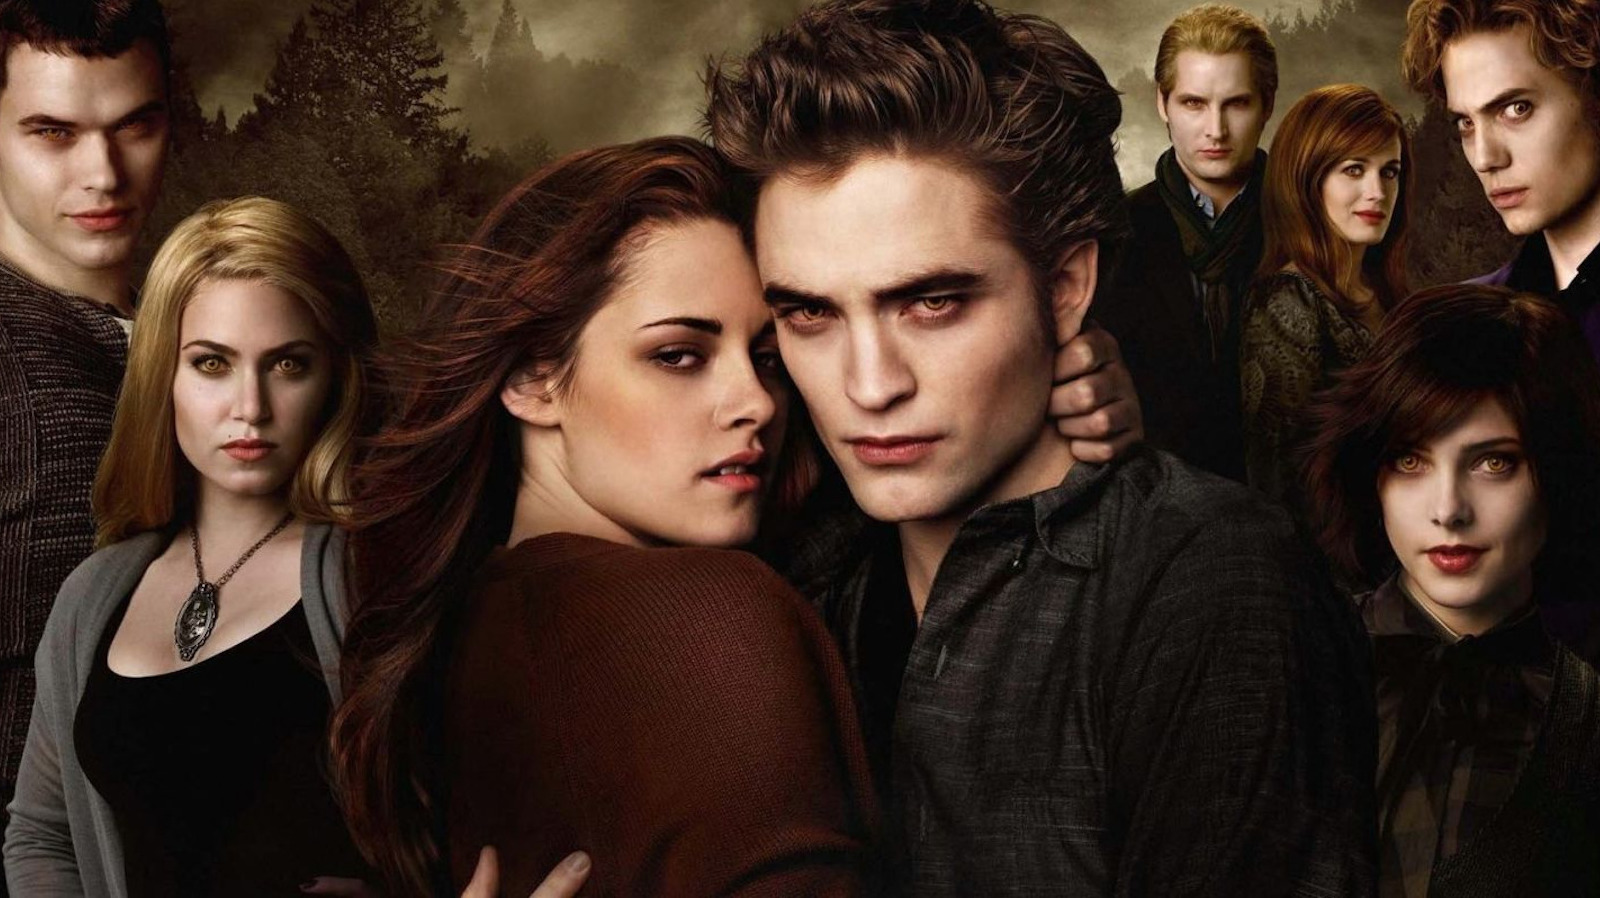 Twilight (2008) Cast and Crew